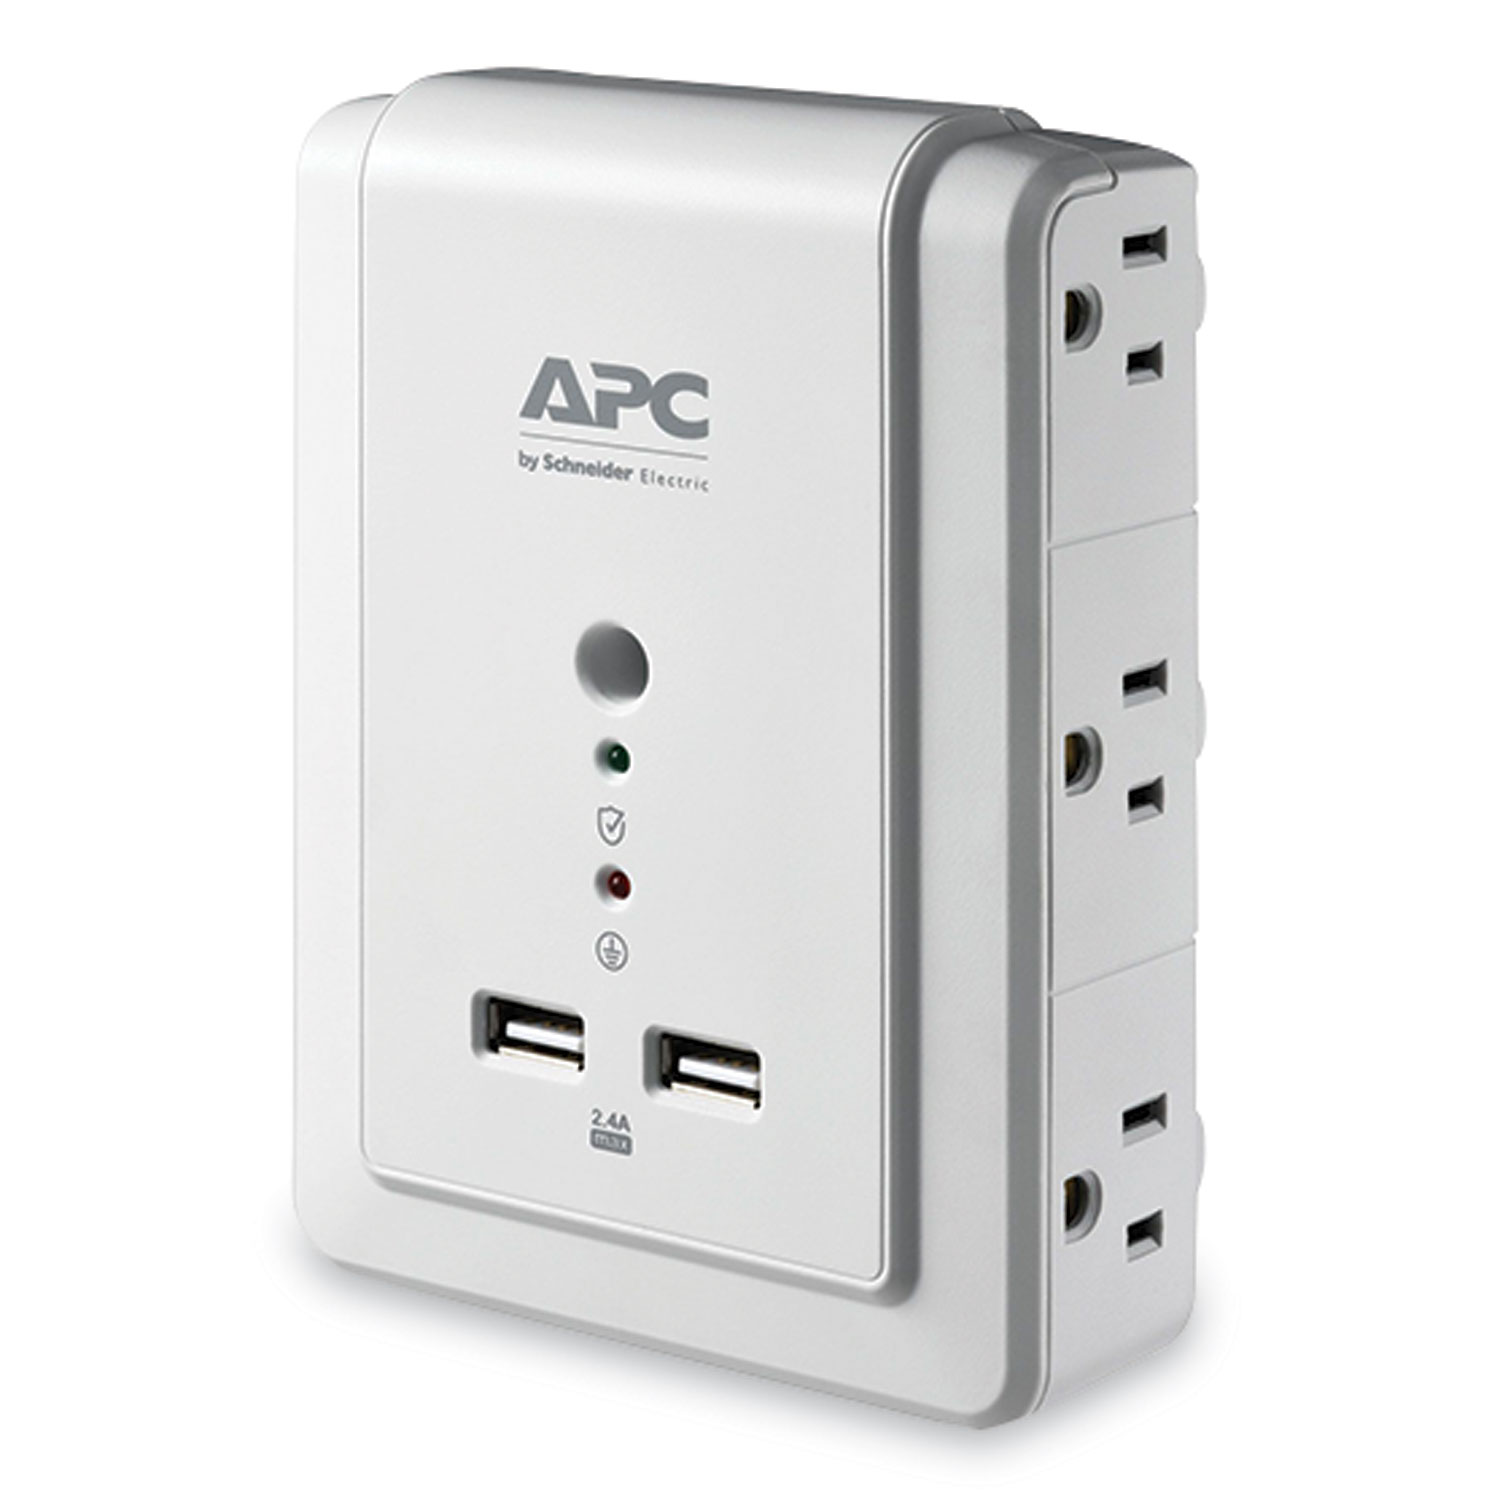  APC P6WU2 SurgeArrest Wall-Mount Surge Protector, 6 AC Outlets, 2 USB Ports, 1020 J, White (SEU2716165) 